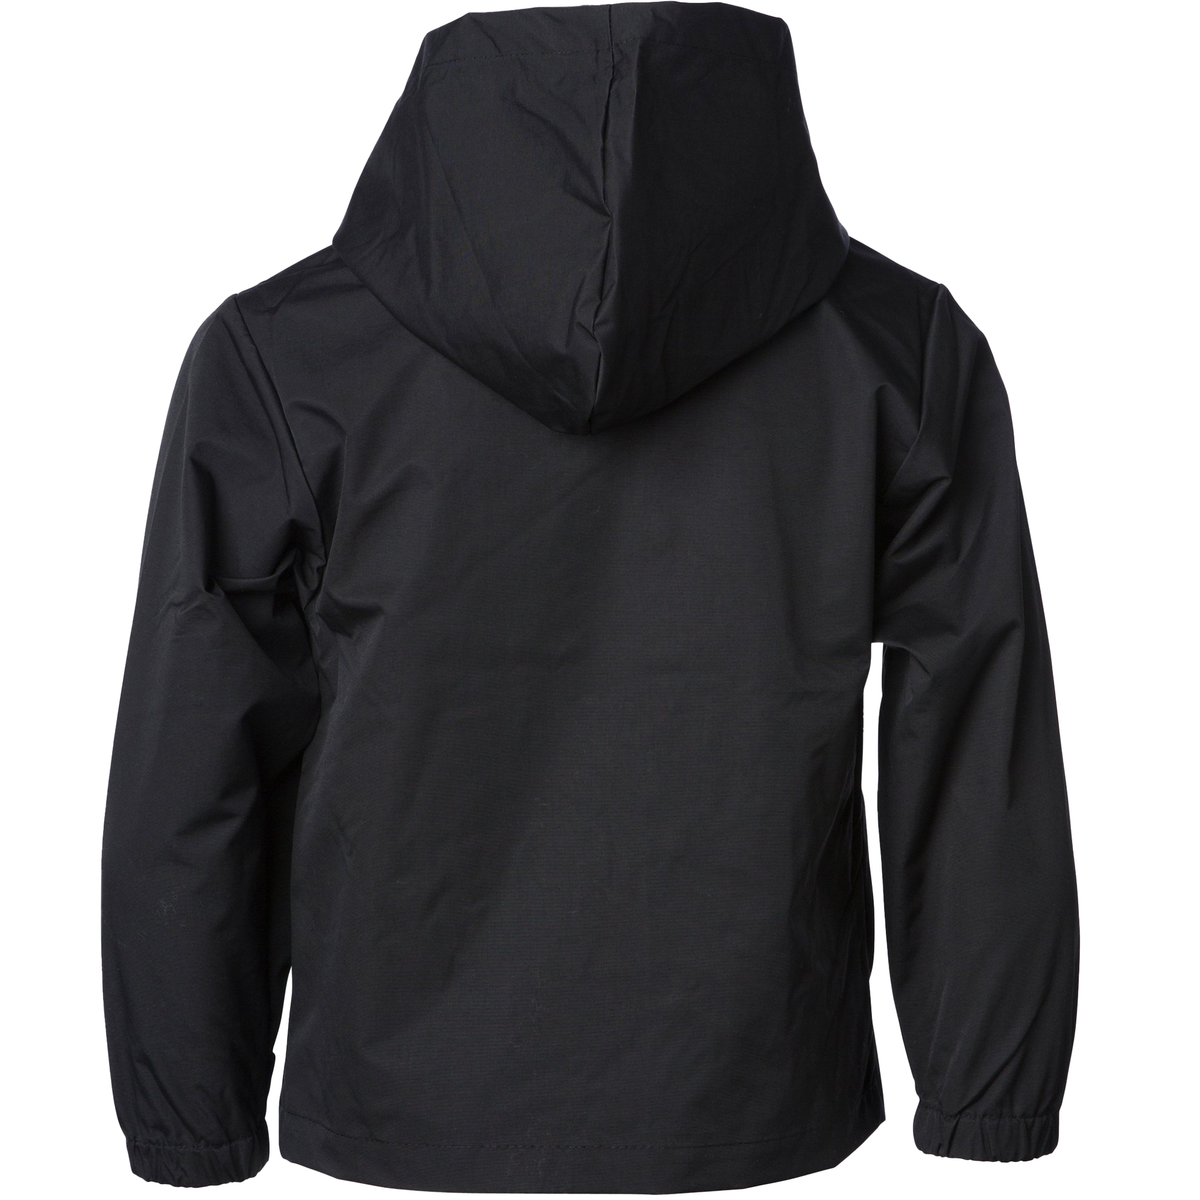 EXP15YNB - Youth Water Resistant Hooded Windbreaker Coaches Jacket